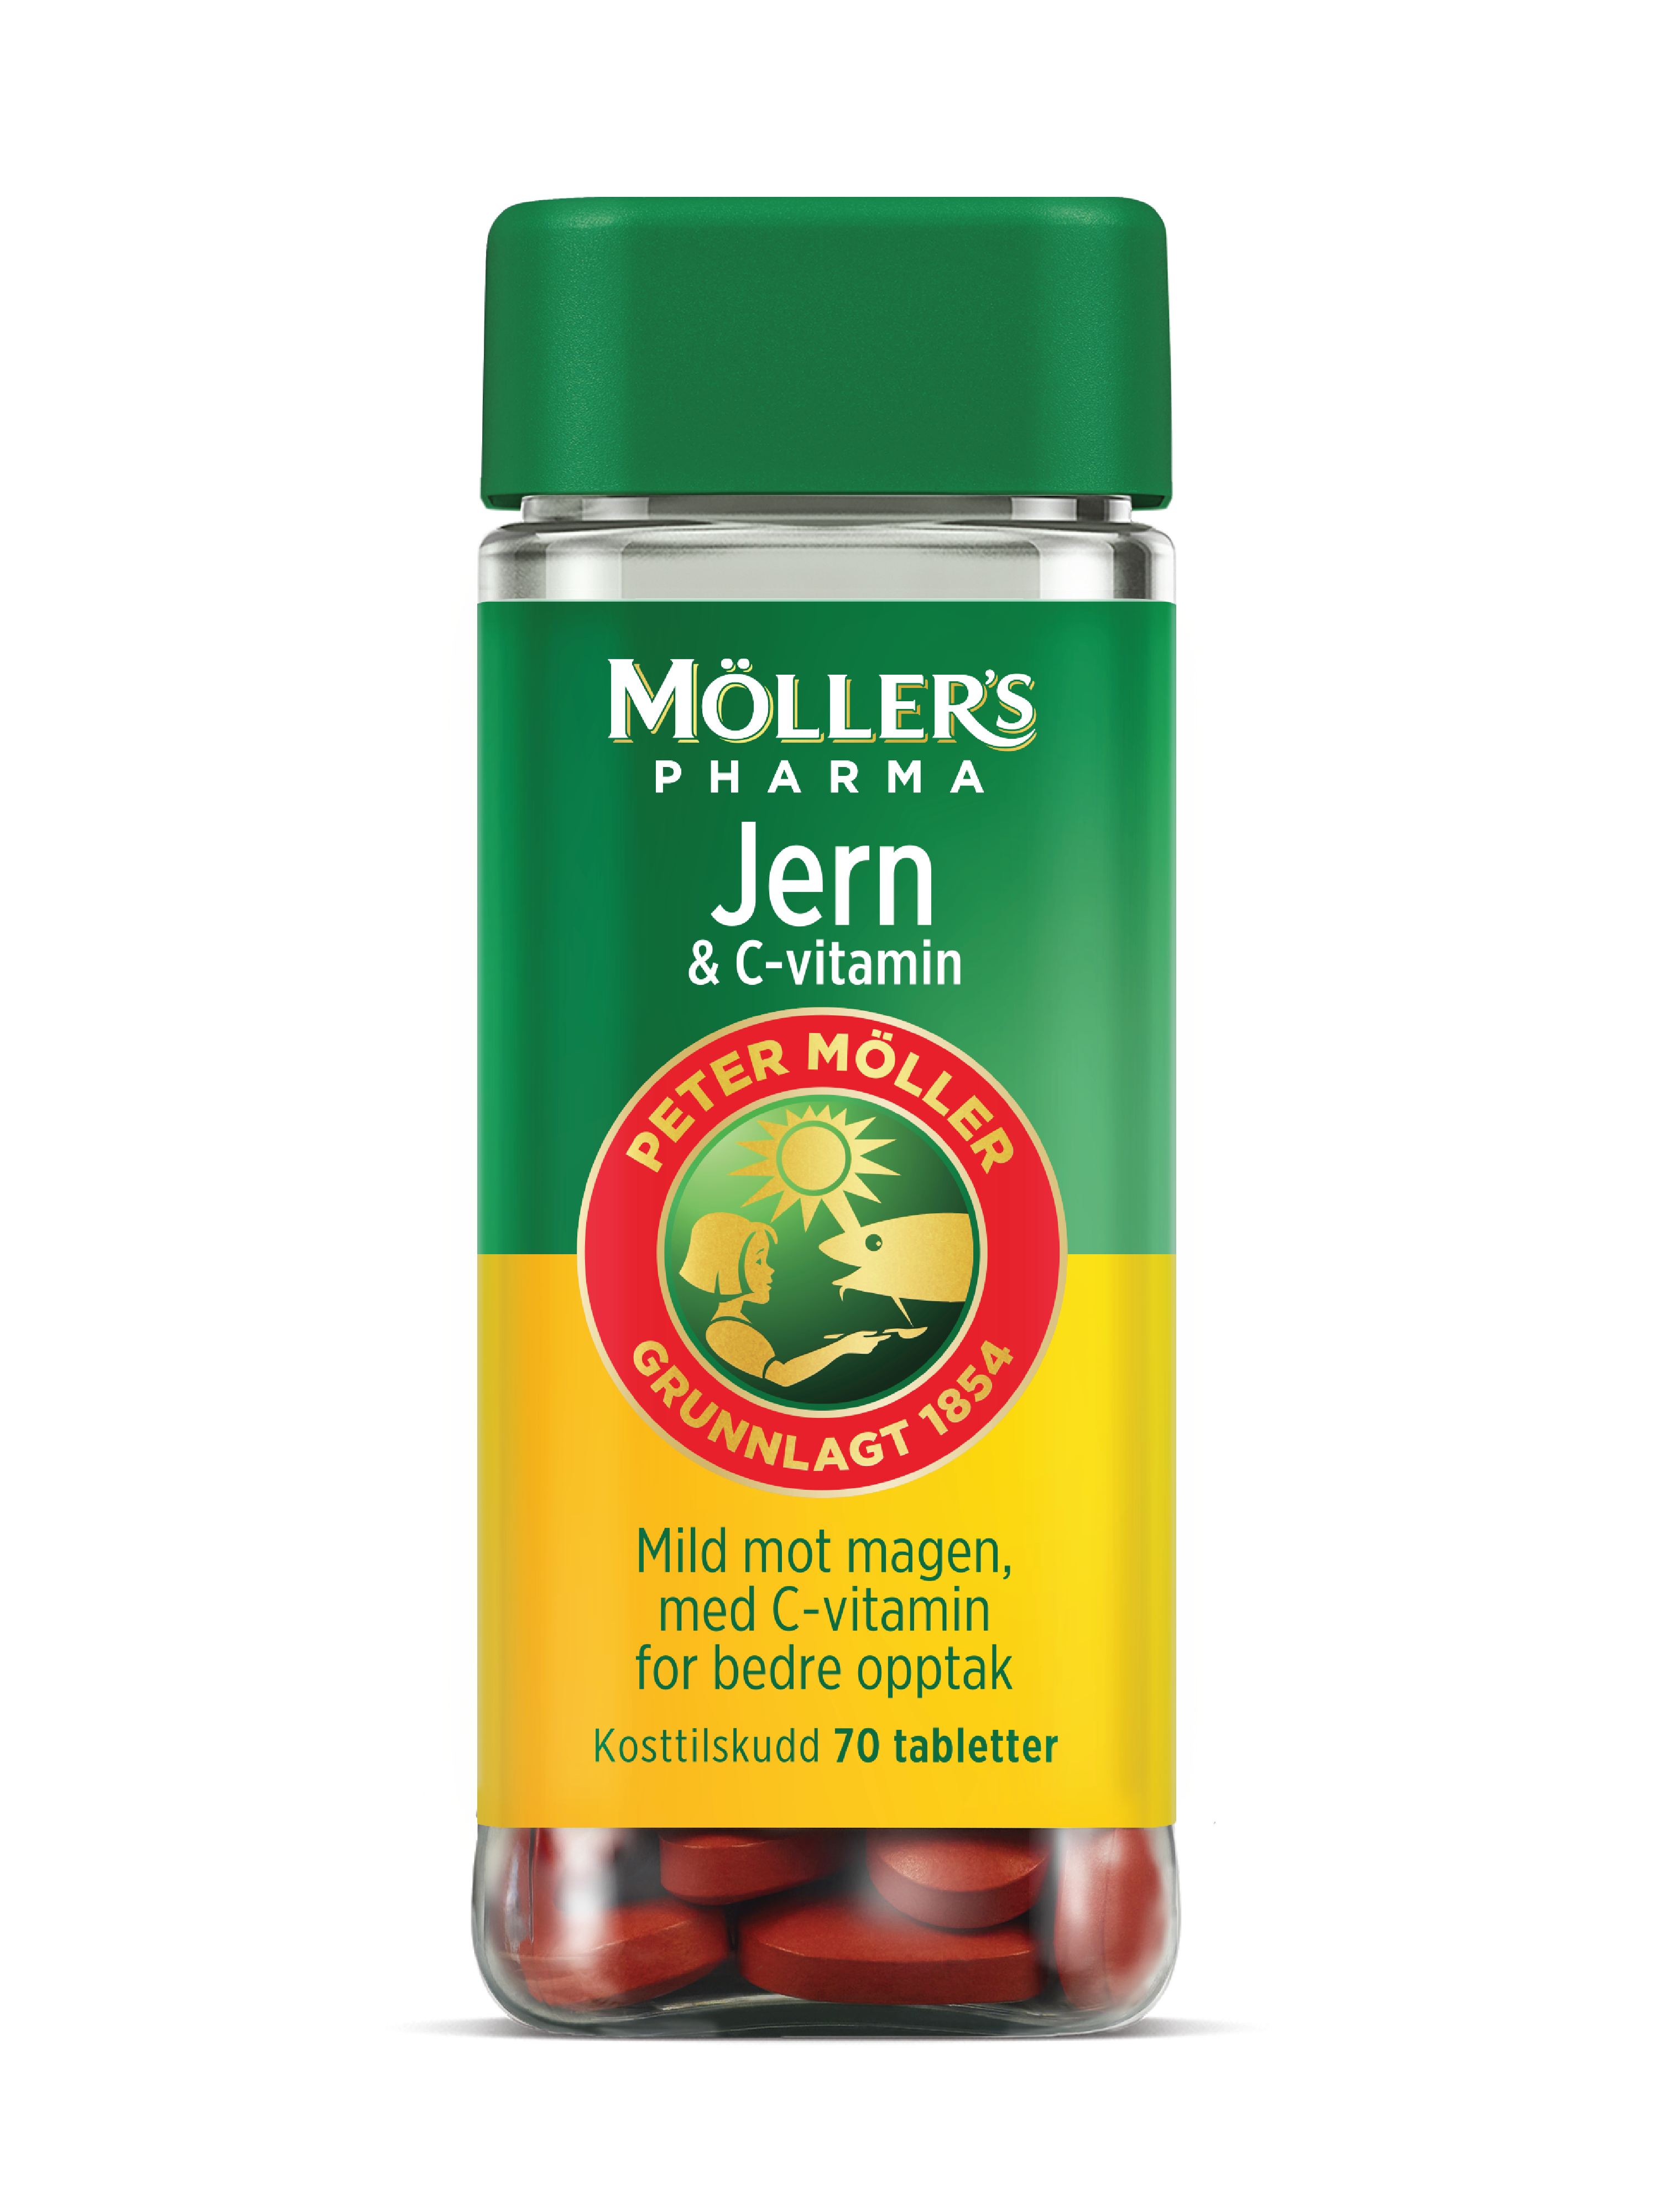 Möller's Pharma Jern & C-vitamin tabletter, 70 stk.